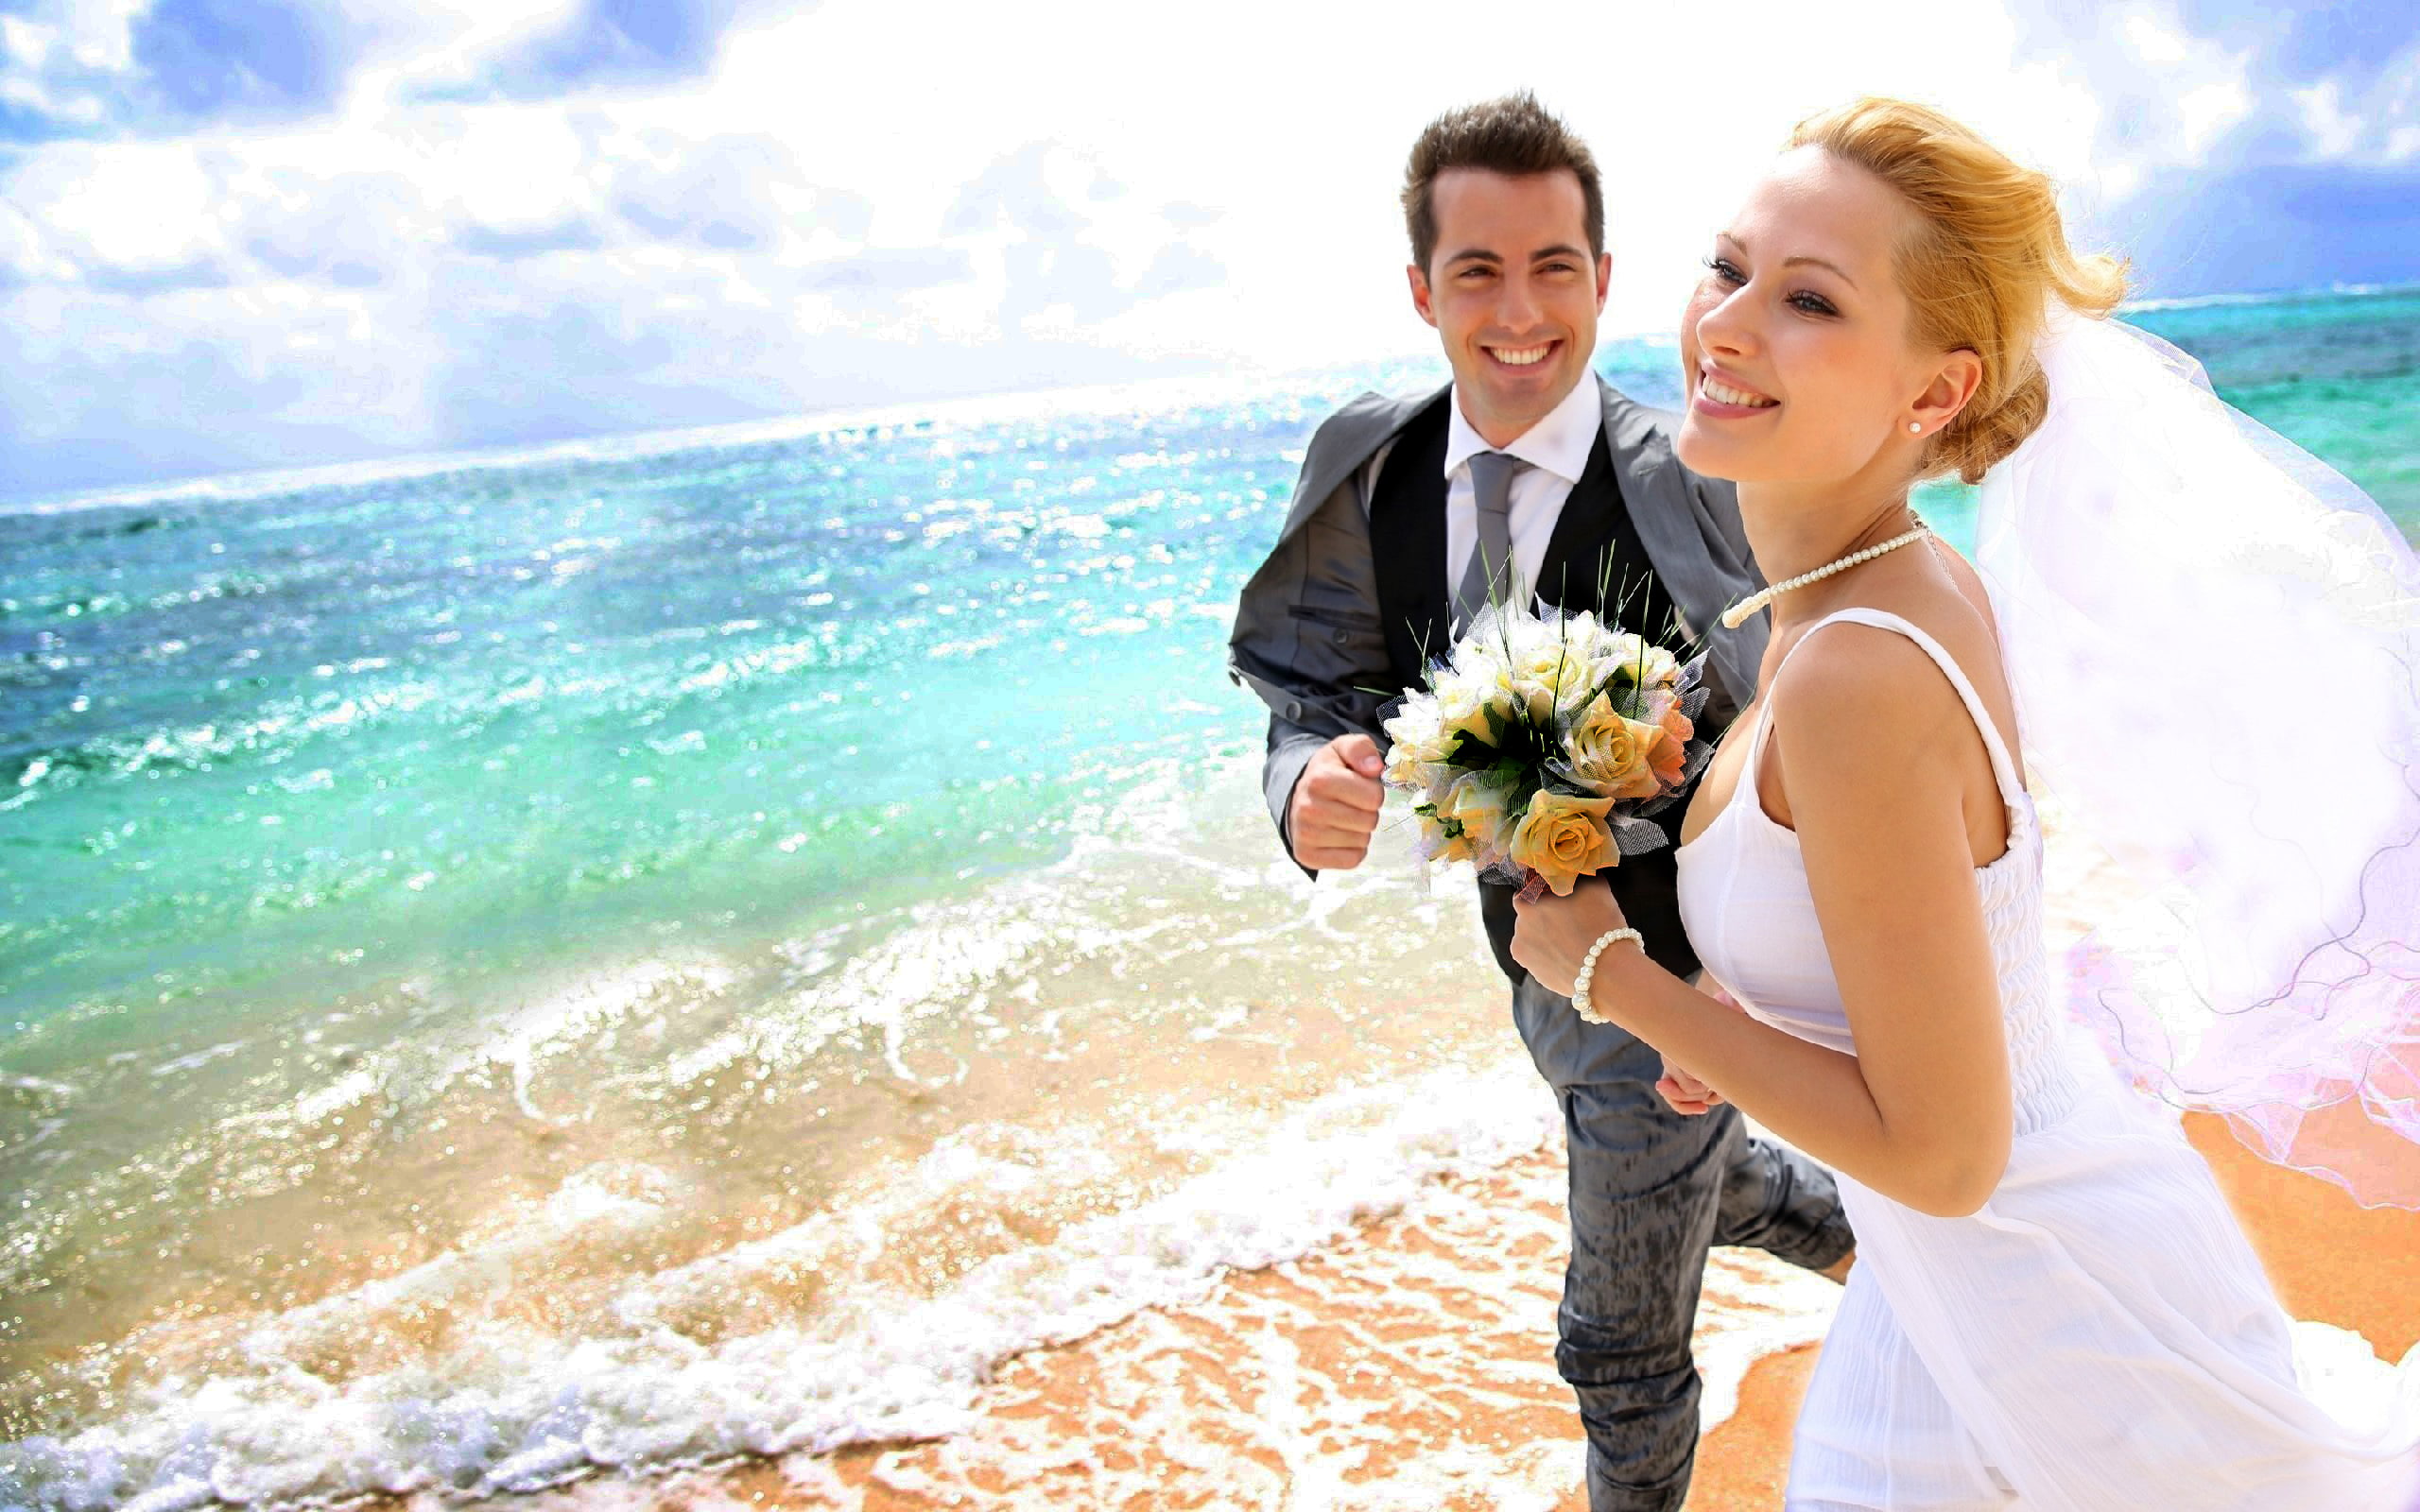 Man-Woman-Wedding-Photos-sea-beach-love couple-HD Wallpaper-2560×1600